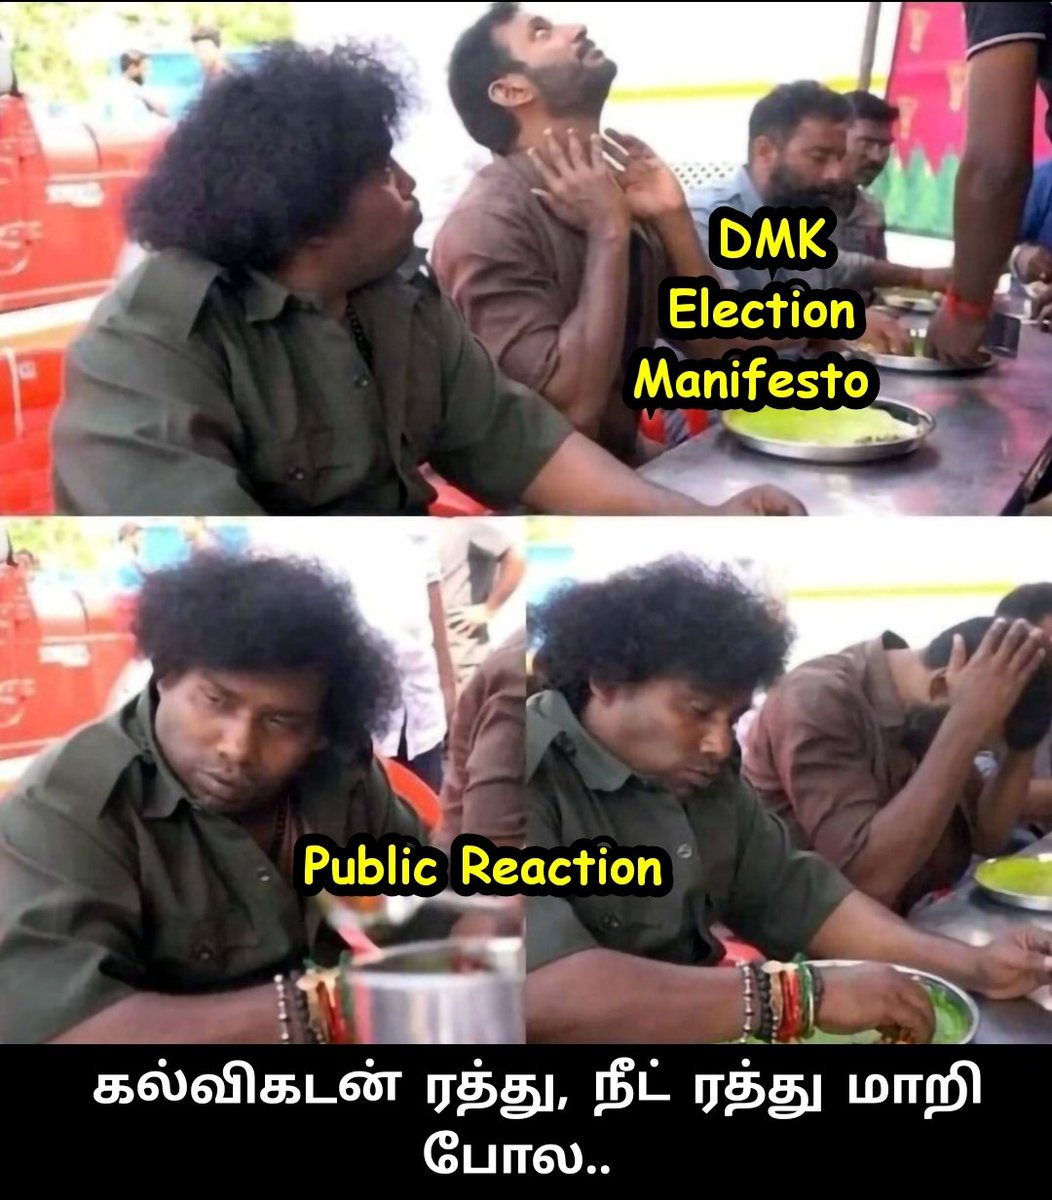 #DMK 😍 #ElectionManifesto